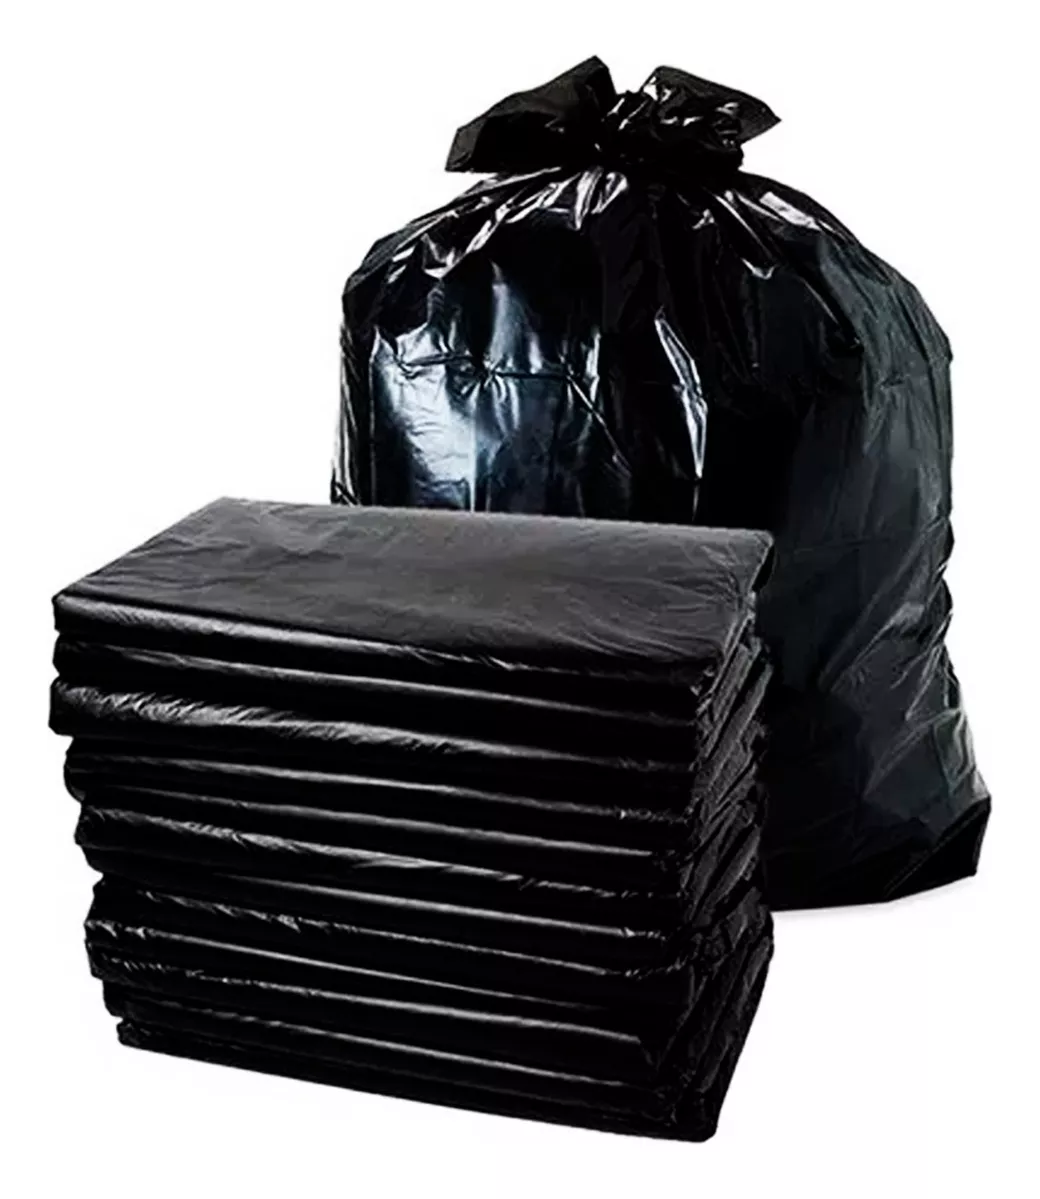 Tercera imagen para búsqueda de bolsa negra para basura 90 x 120